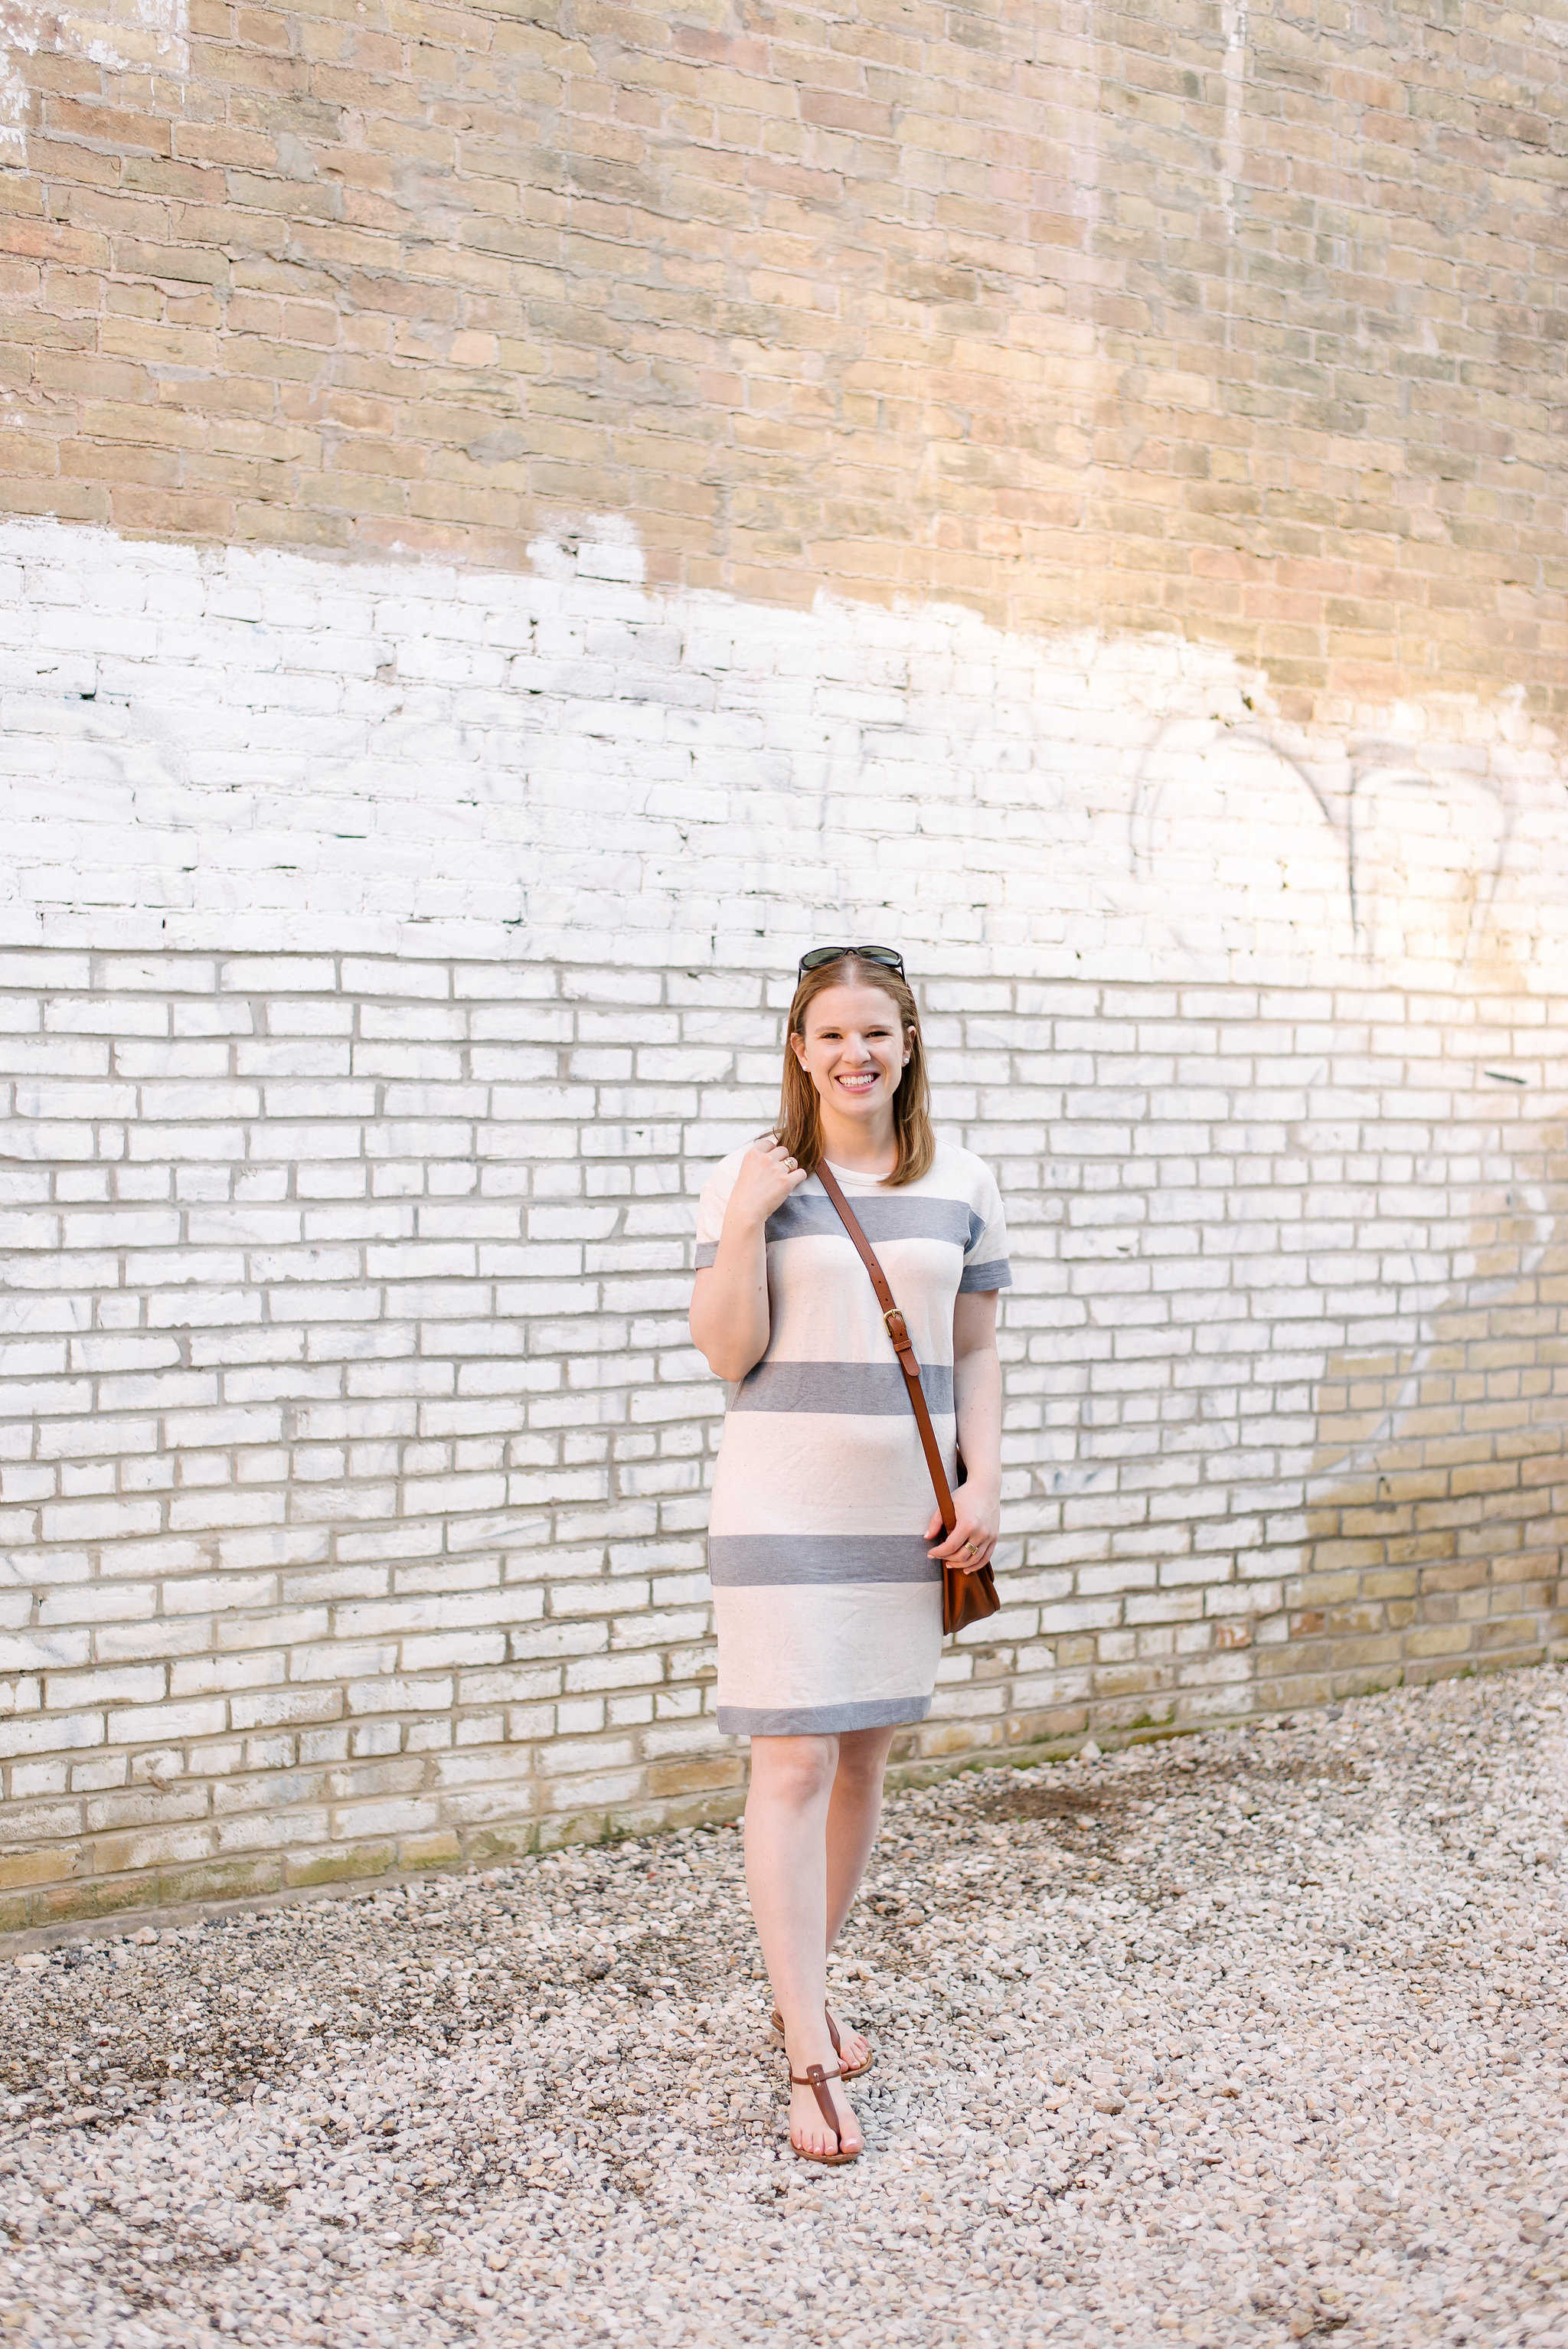 The Striped Tee Dress | Something Good, @danaerinw , 